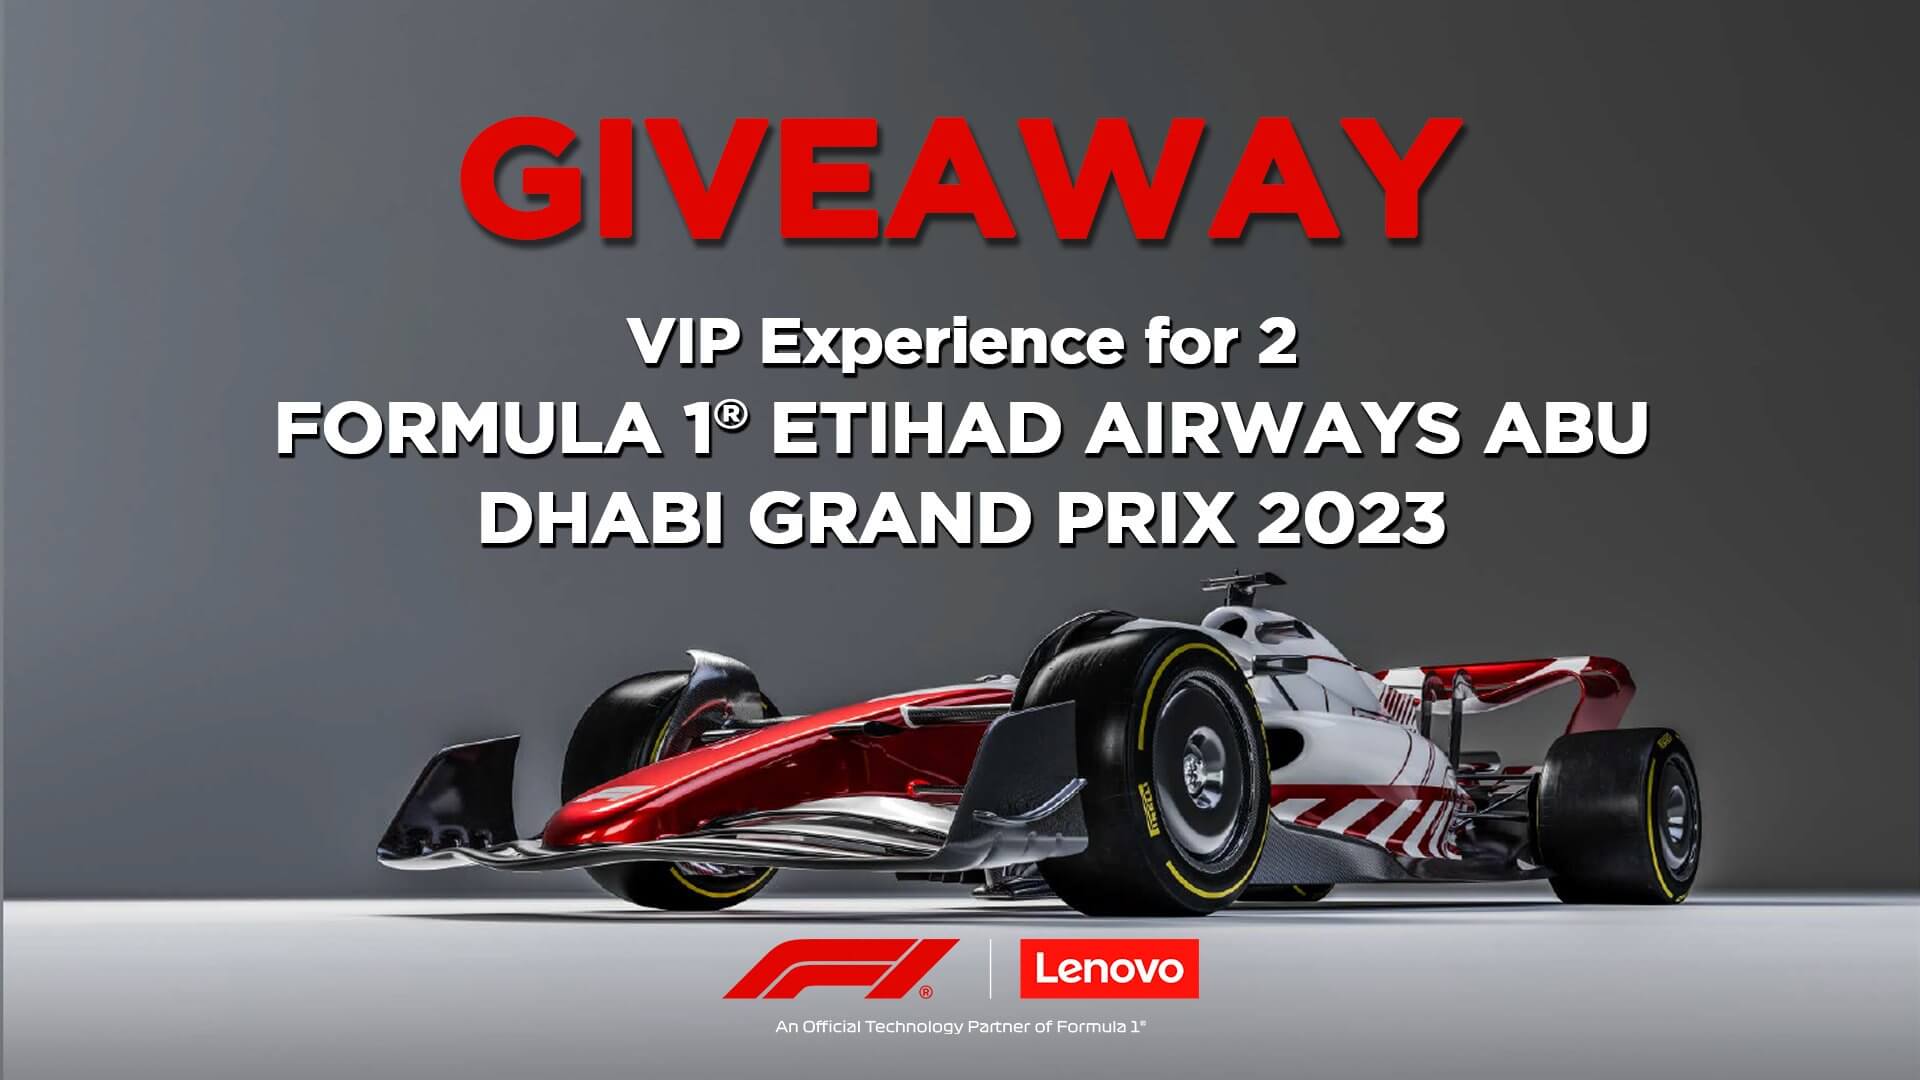 Win free VIP tickets for the 2023 ETIHAD ABU DHABI GRAND PRIX with Lenovo